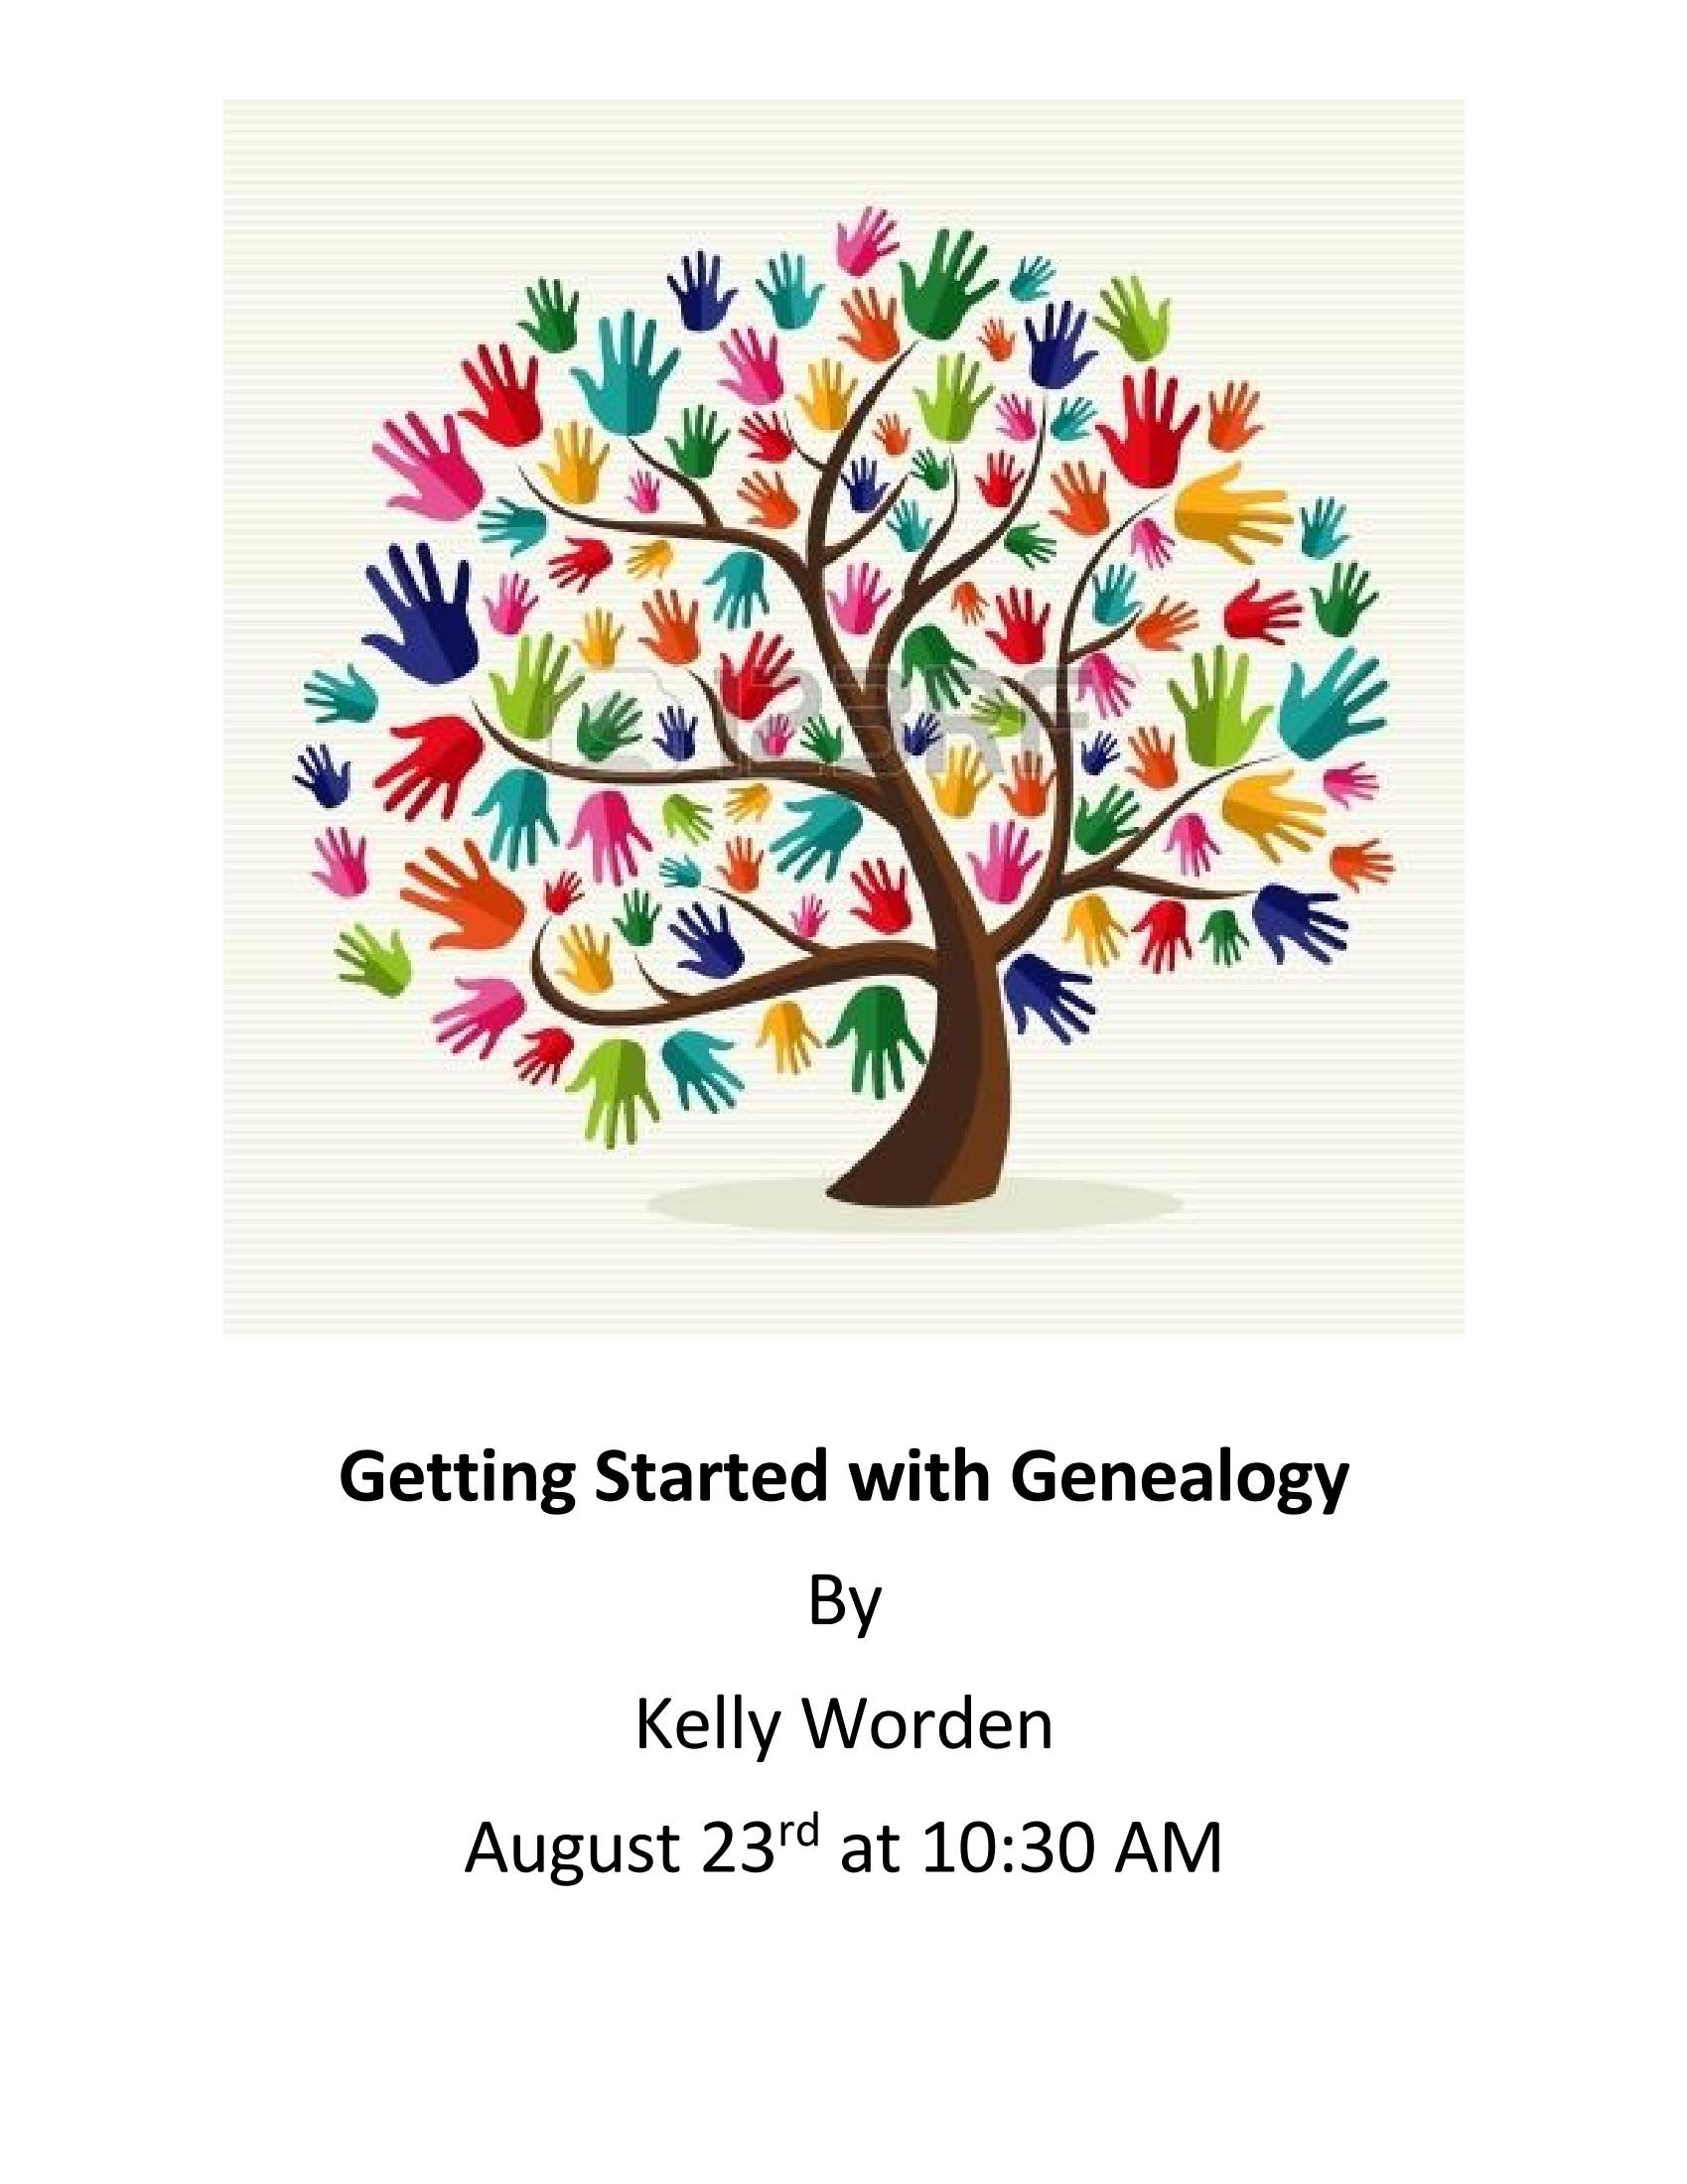 genealogy poster_Page_1.jpeg